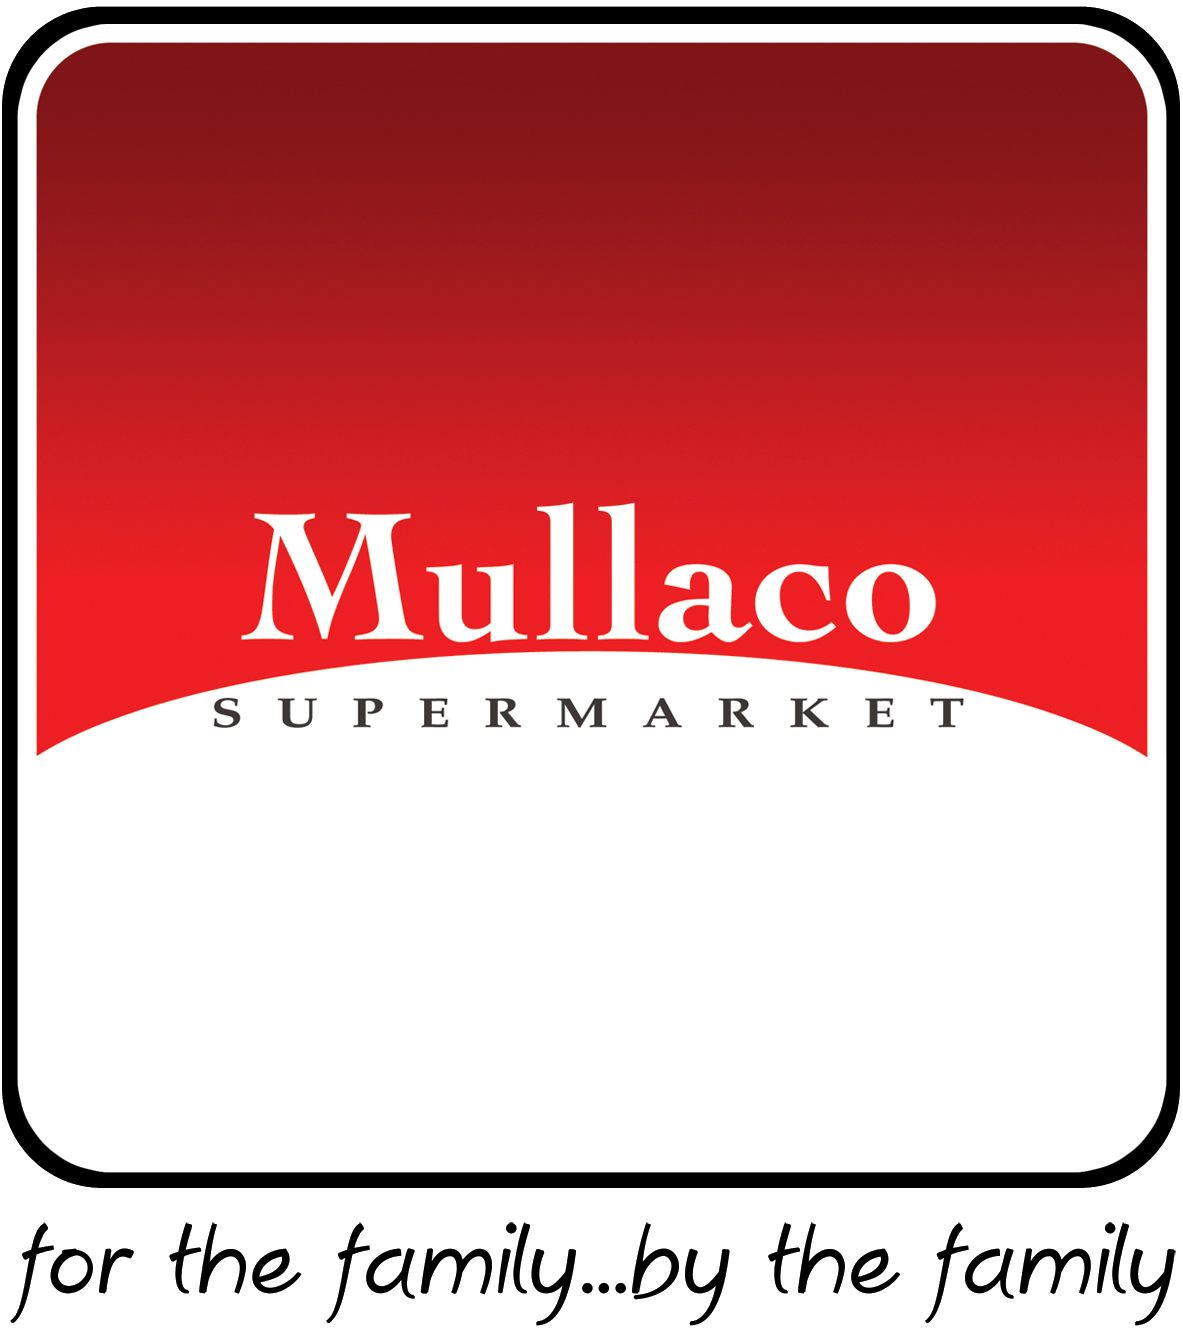 Red and White Supermarket Logo - Mullaco Supermarket | Mullaco Supermarket